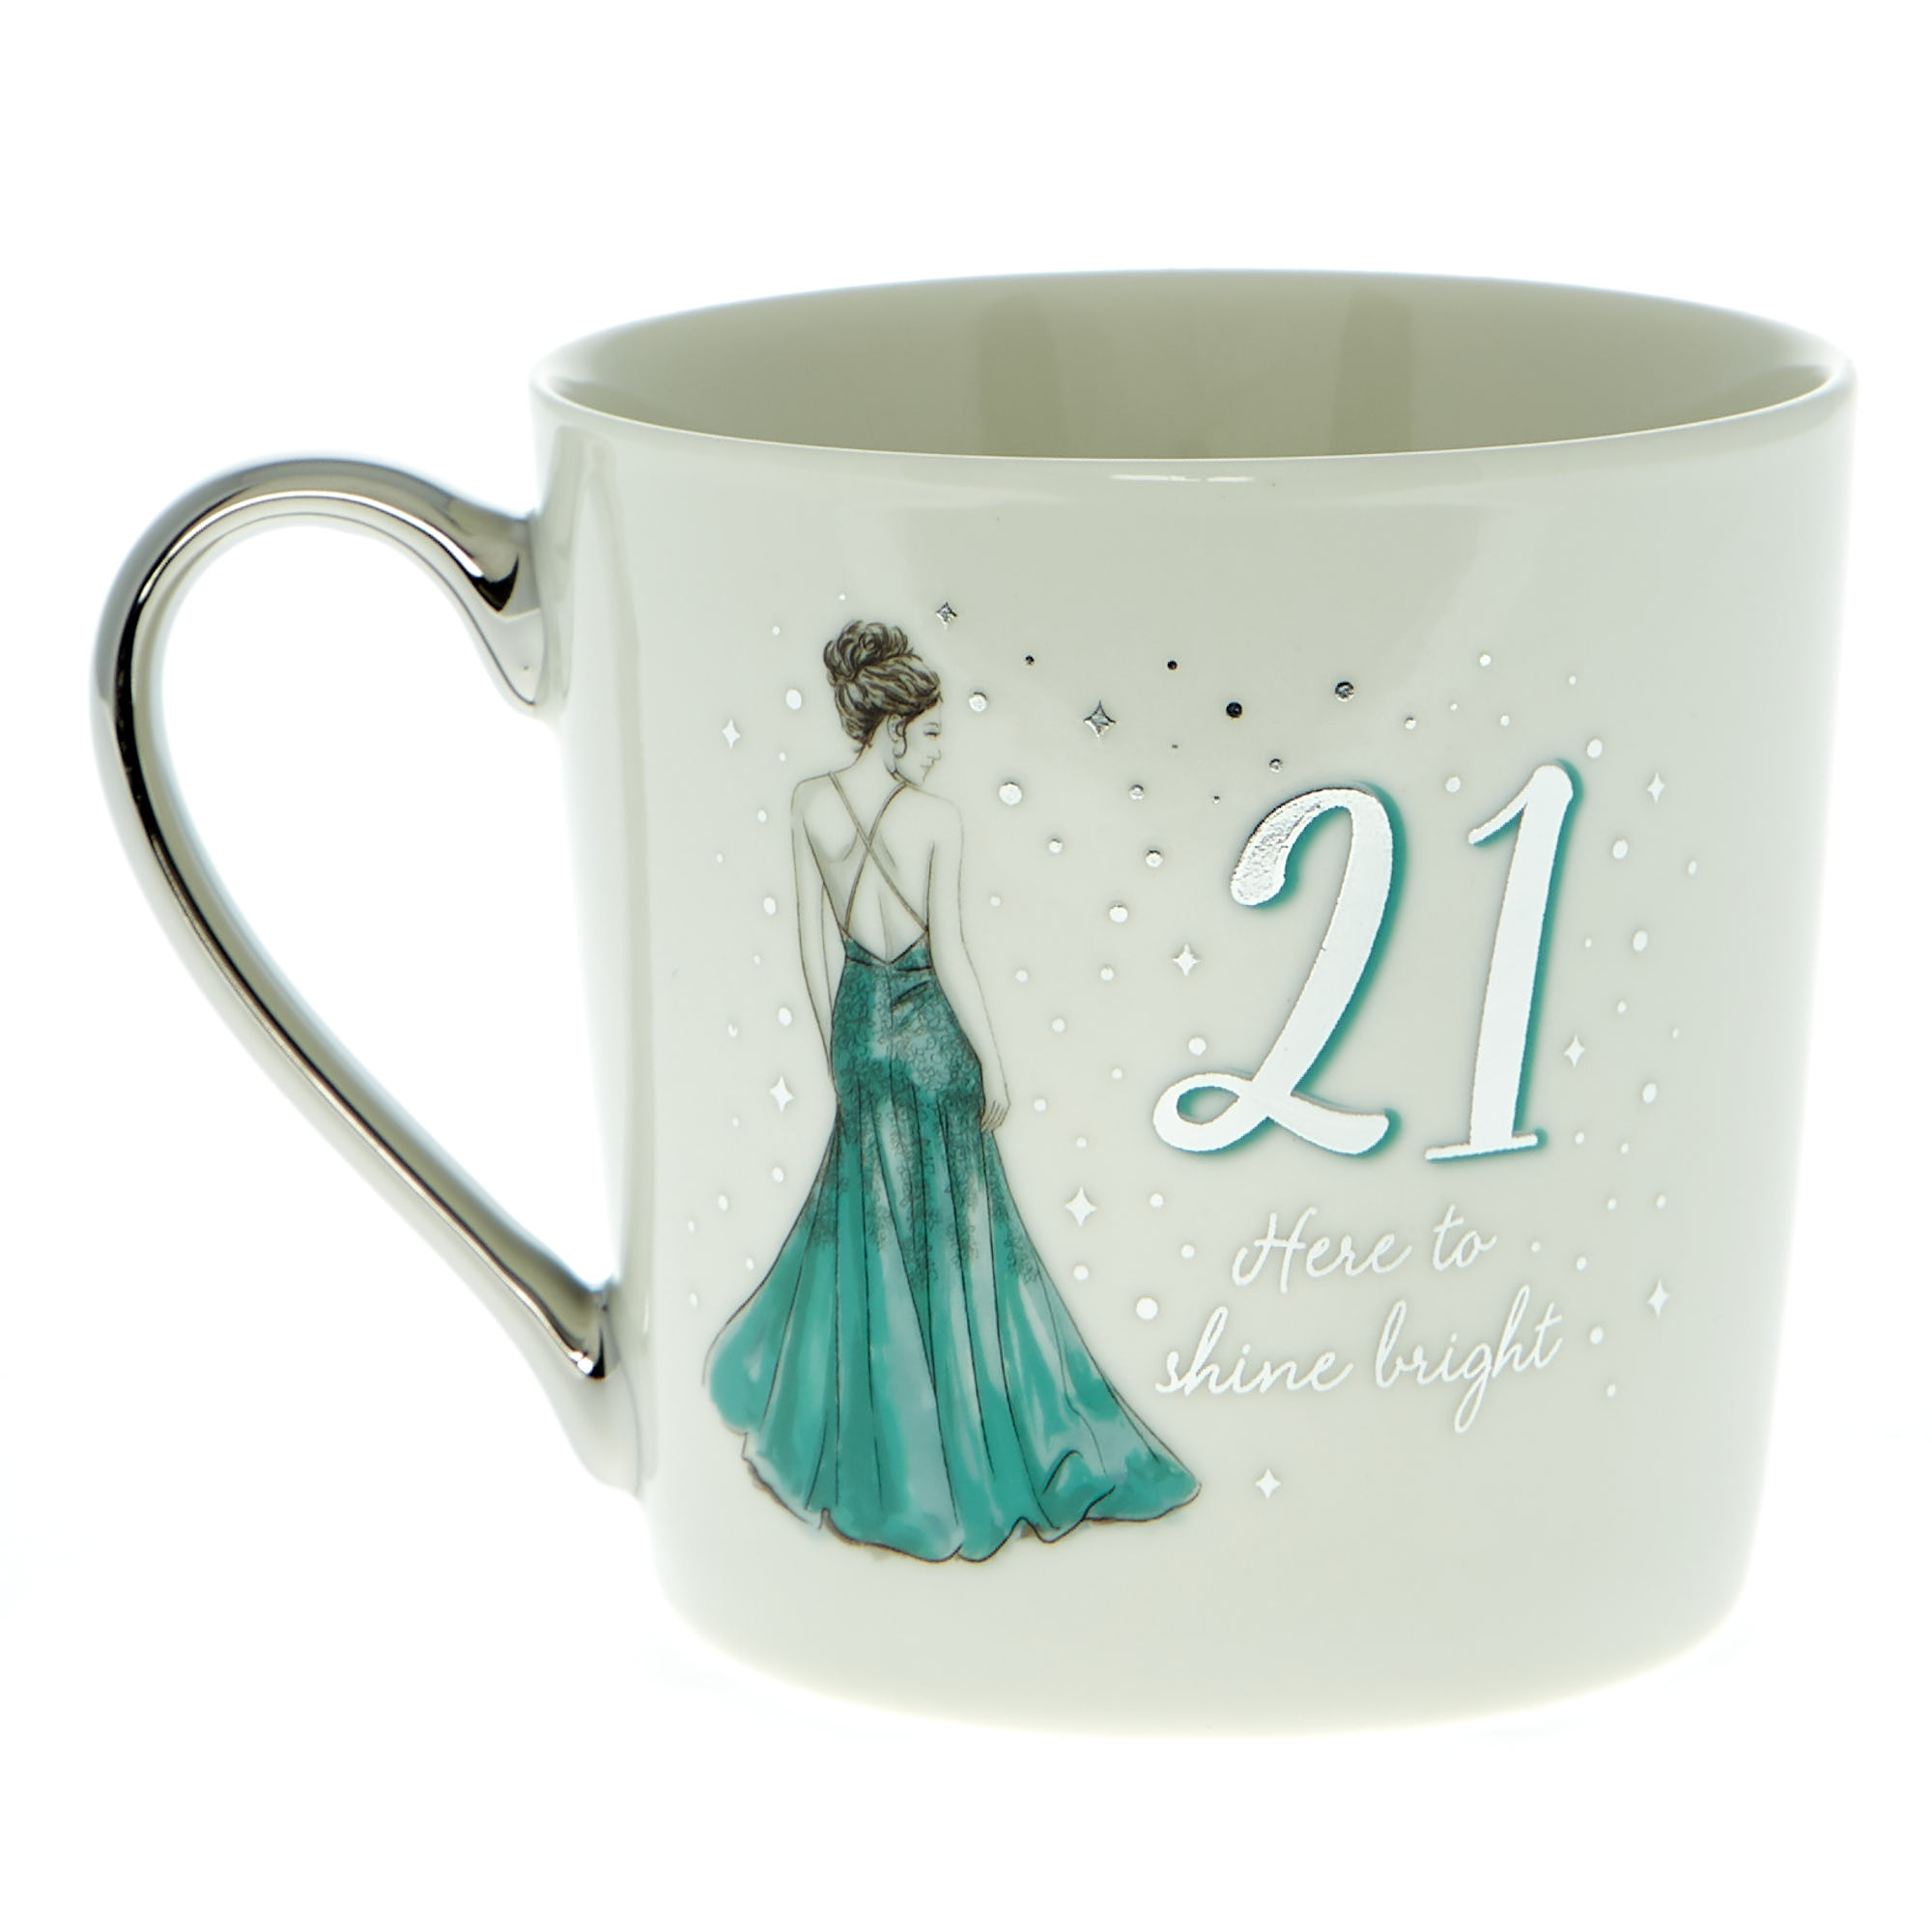 21 Here To Shine Bright Mug